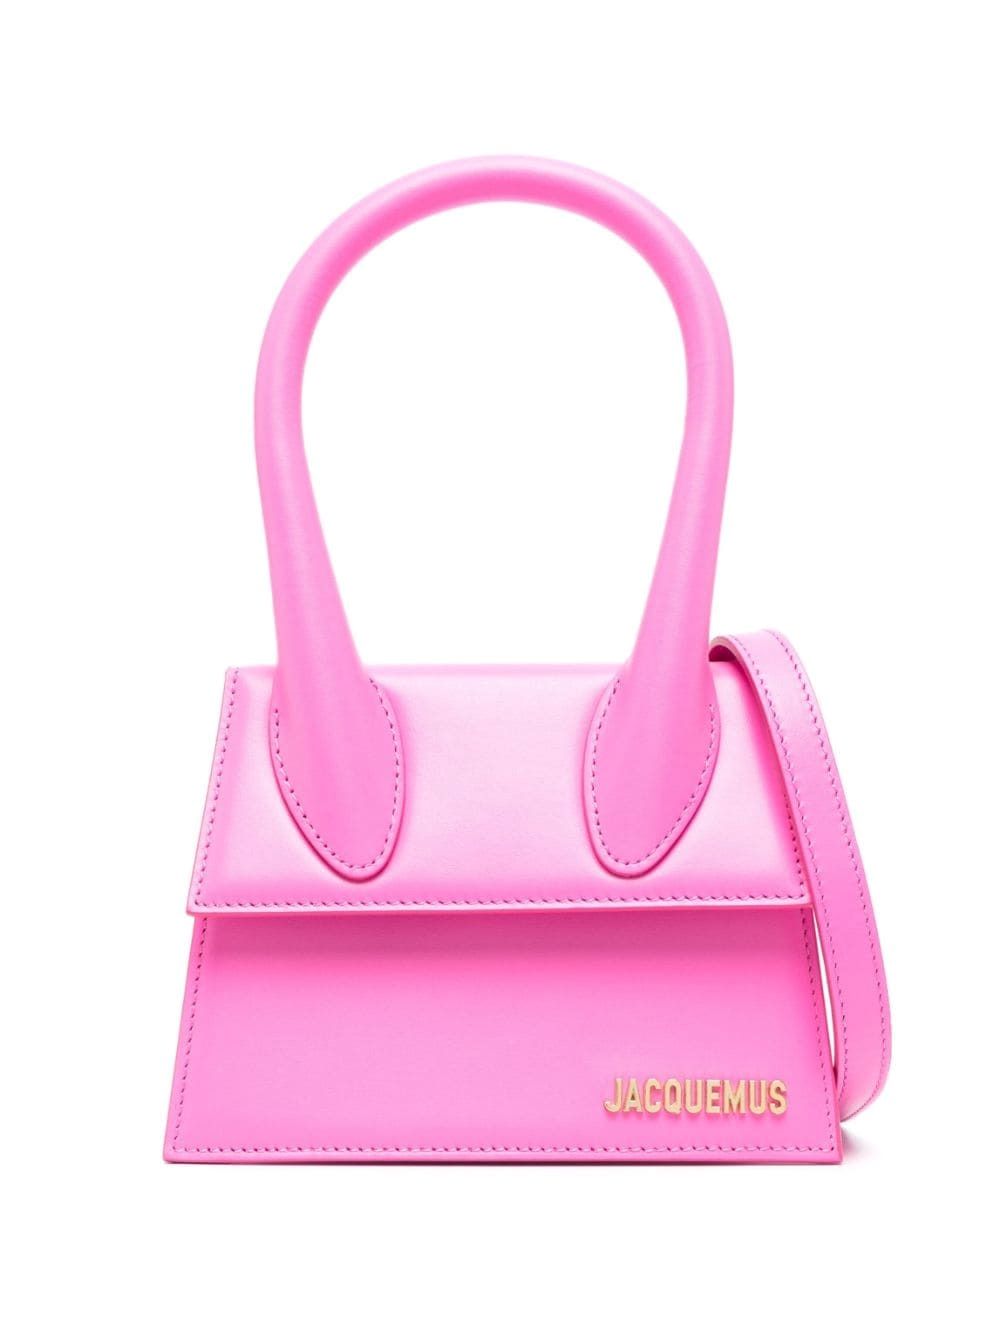 Jacquemus Long Le Chiquito Pink Top Handle Bag